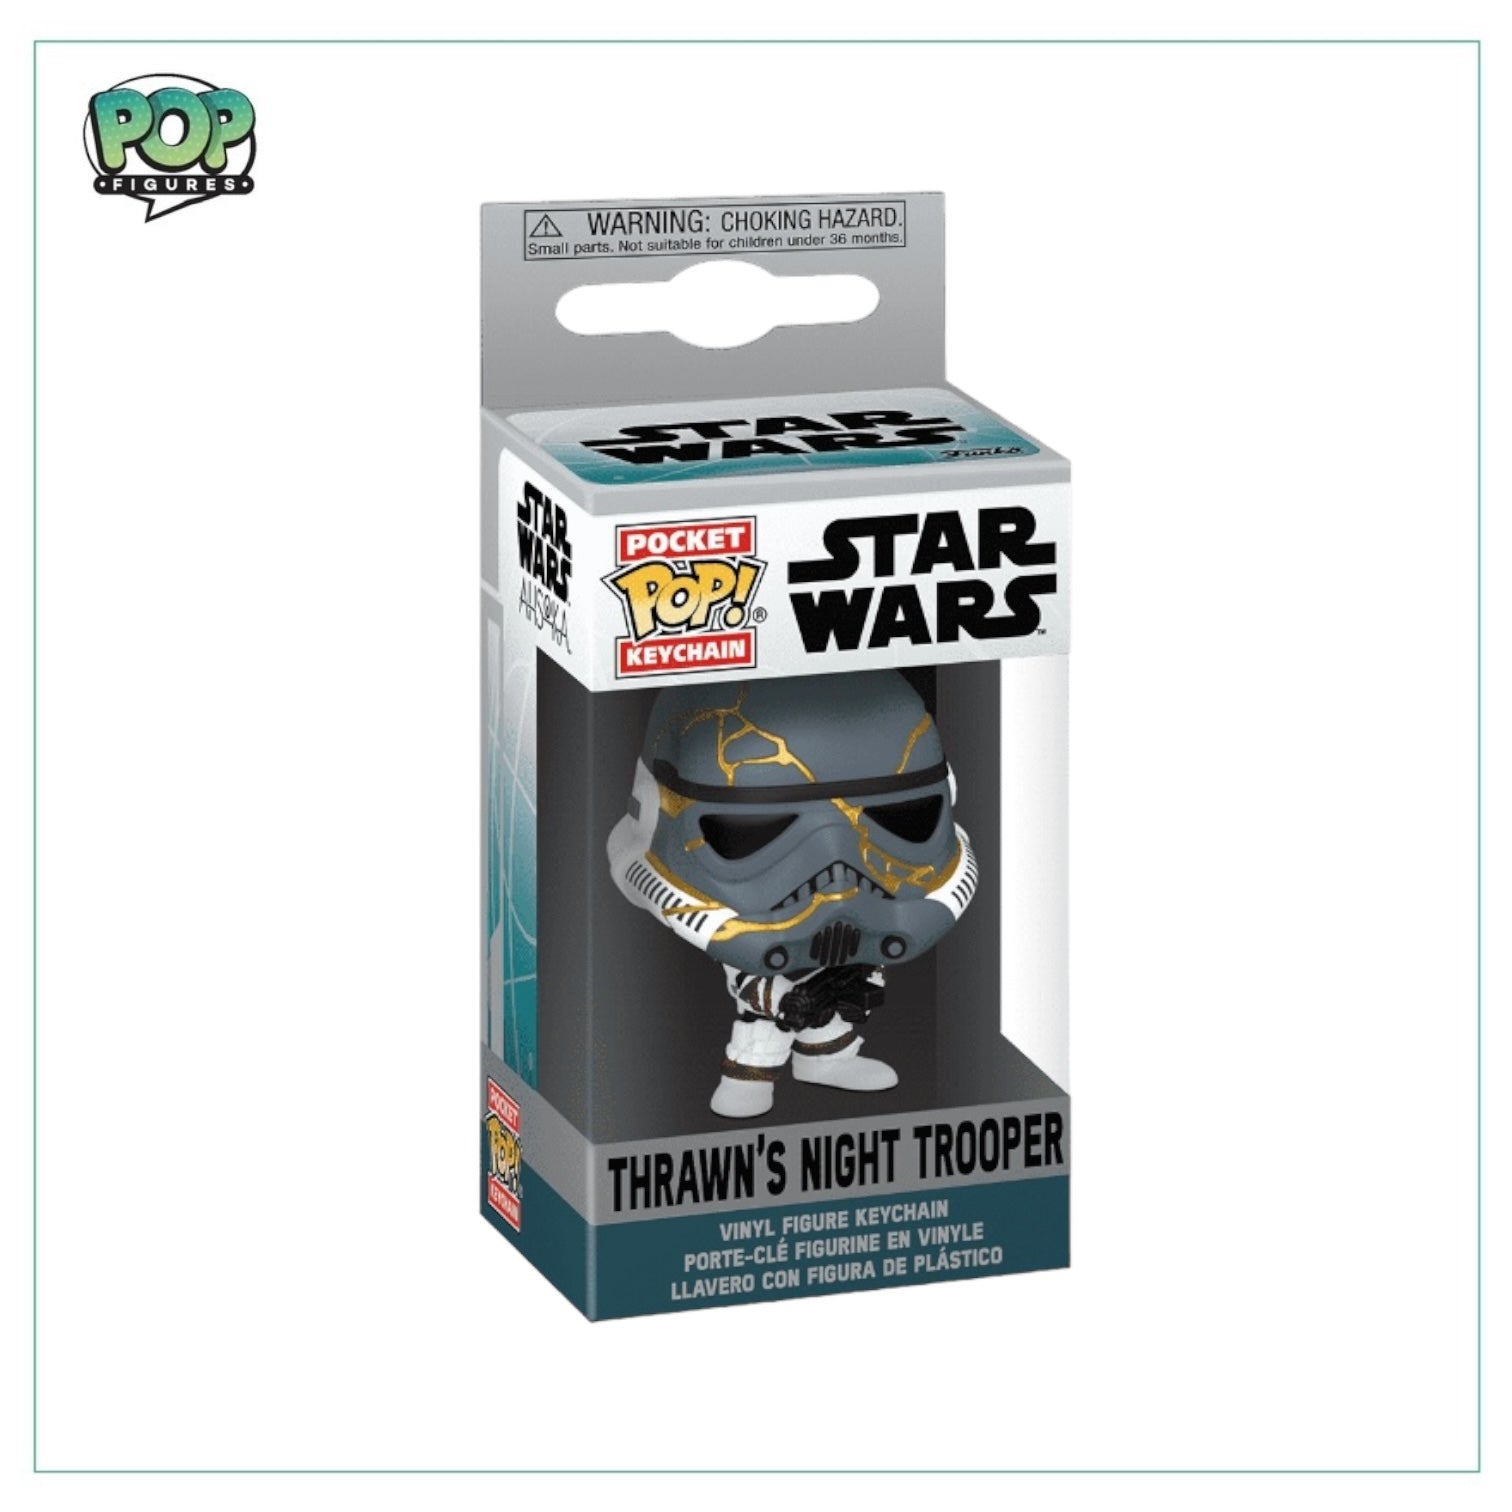 Thrawn's Night Trooper Funko Pocket Pop! Keychain - Star Wars